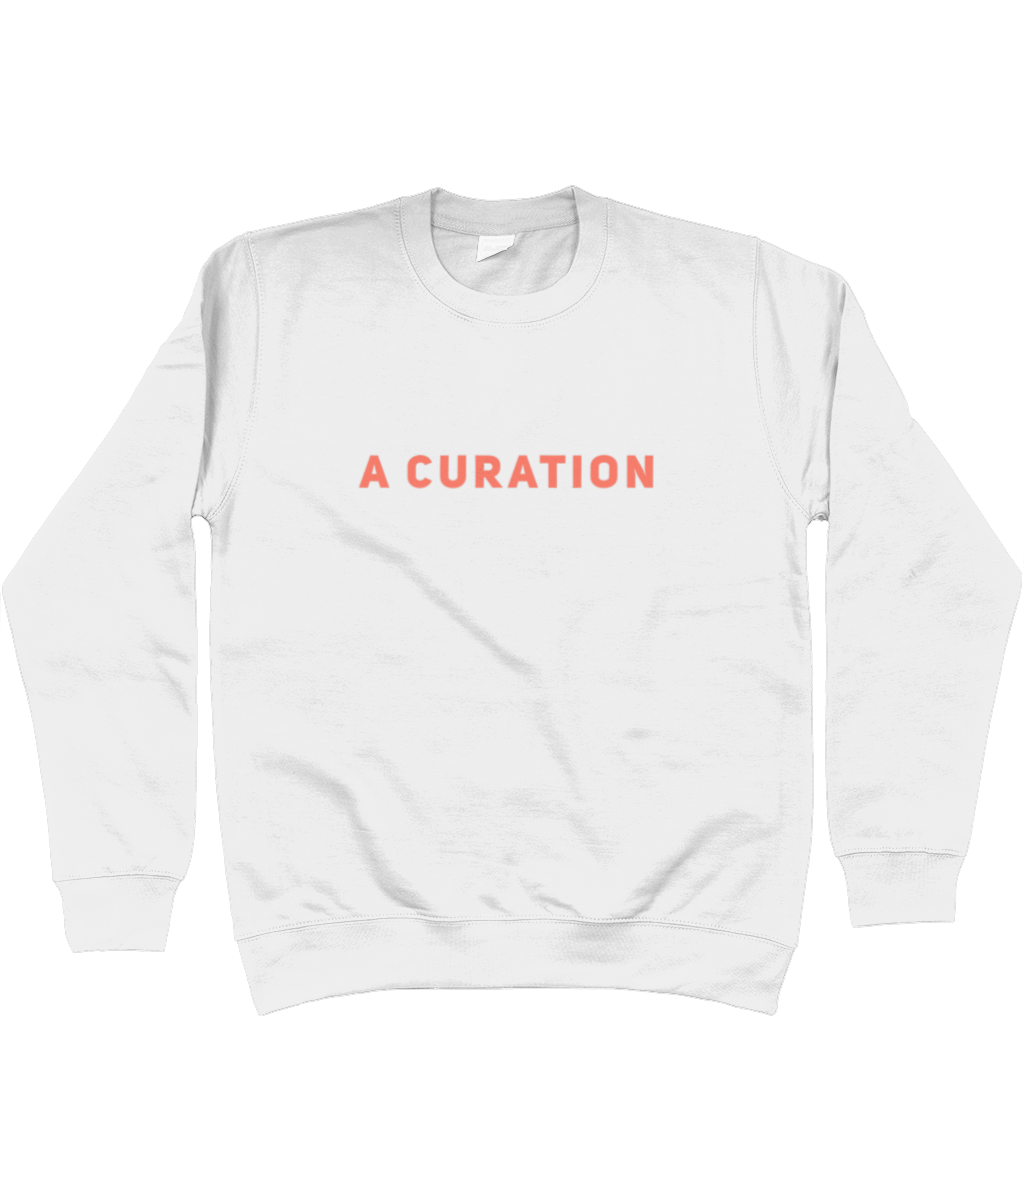 A CURATION Sweatshirt